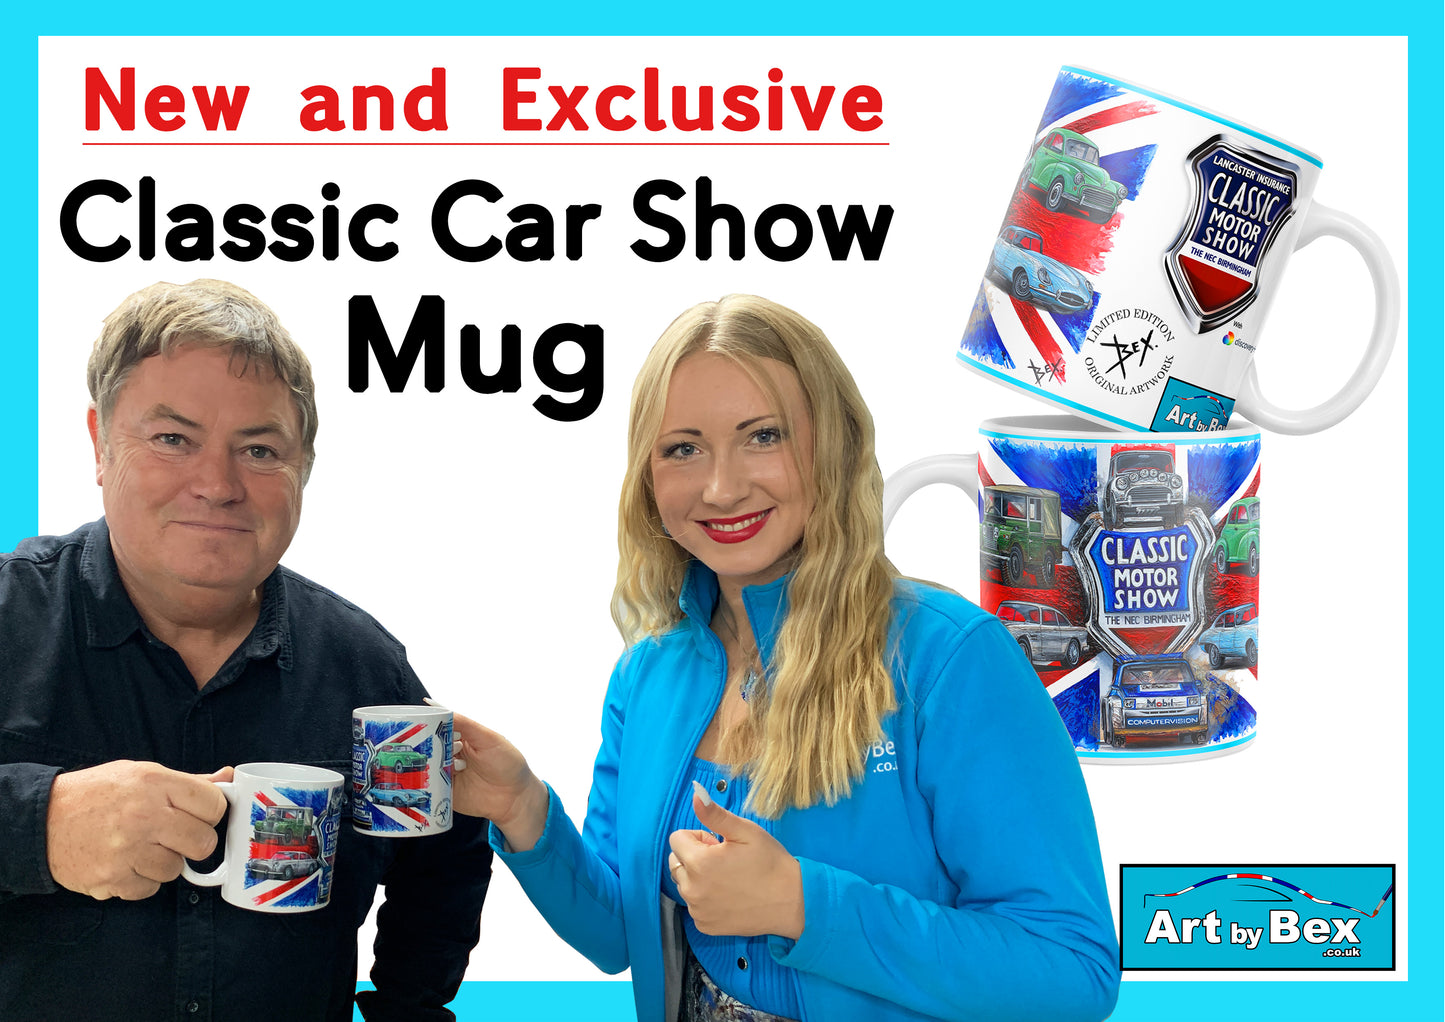 Classic Motor Show Mug